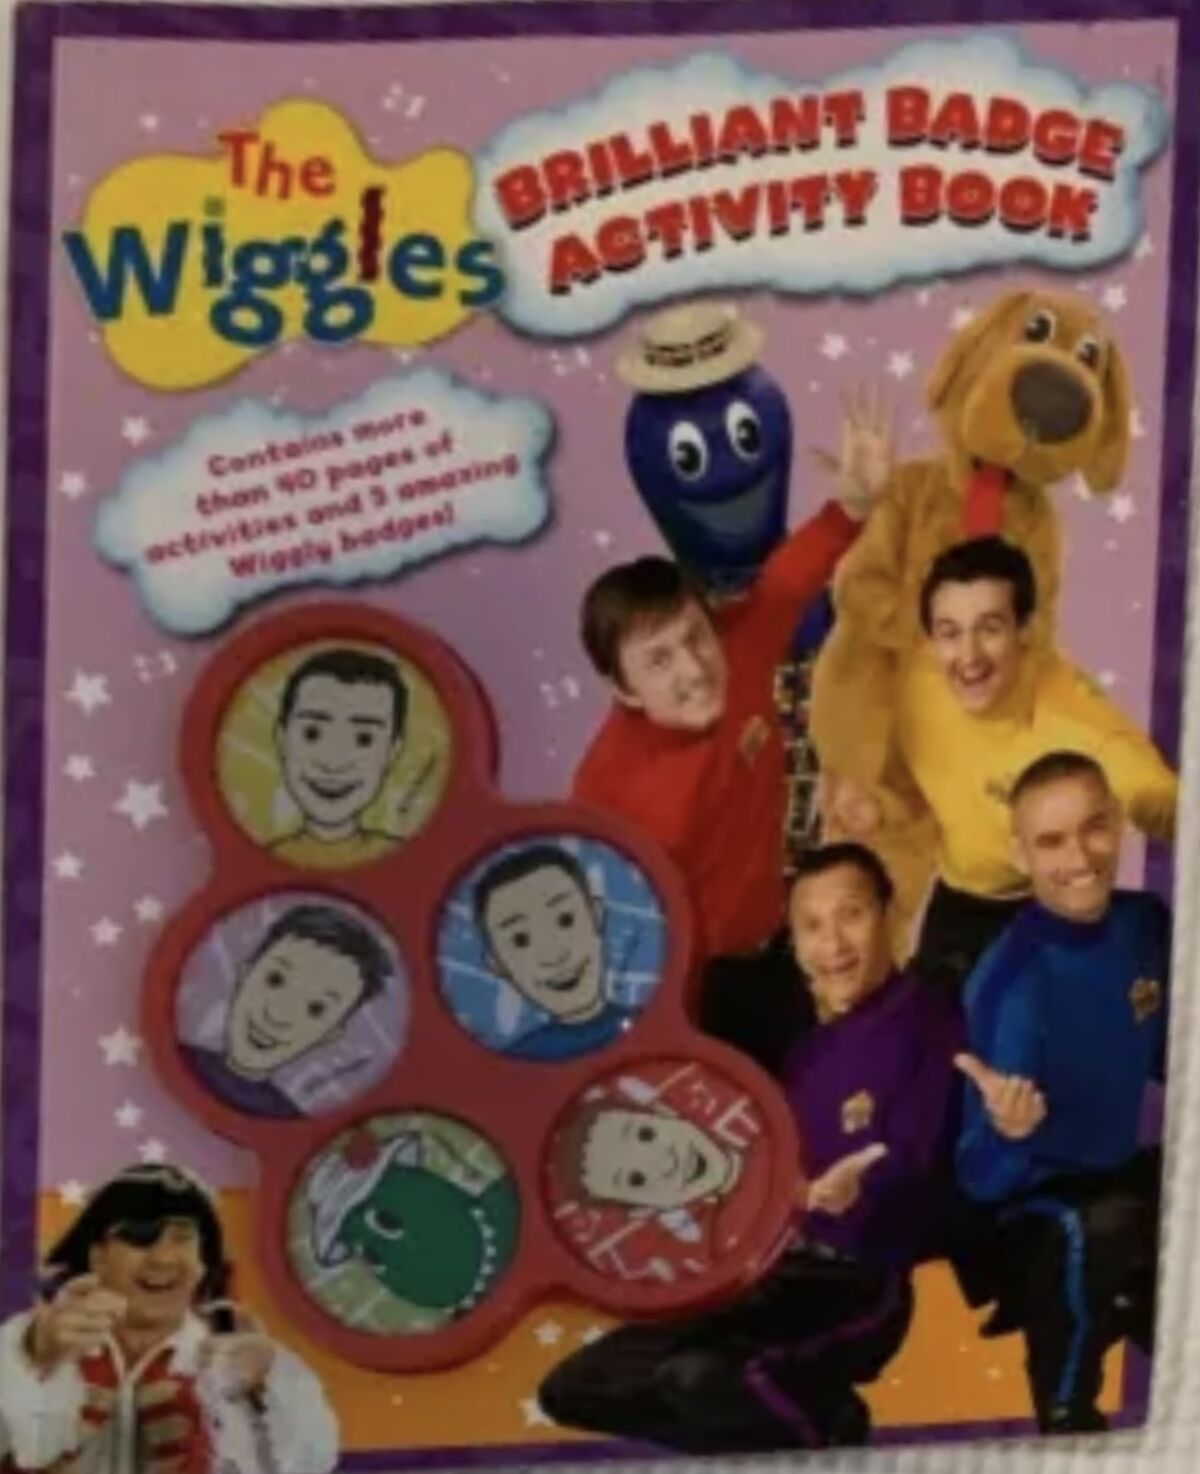 Brilliant Badge Activity Book Wigglepedia Fandom